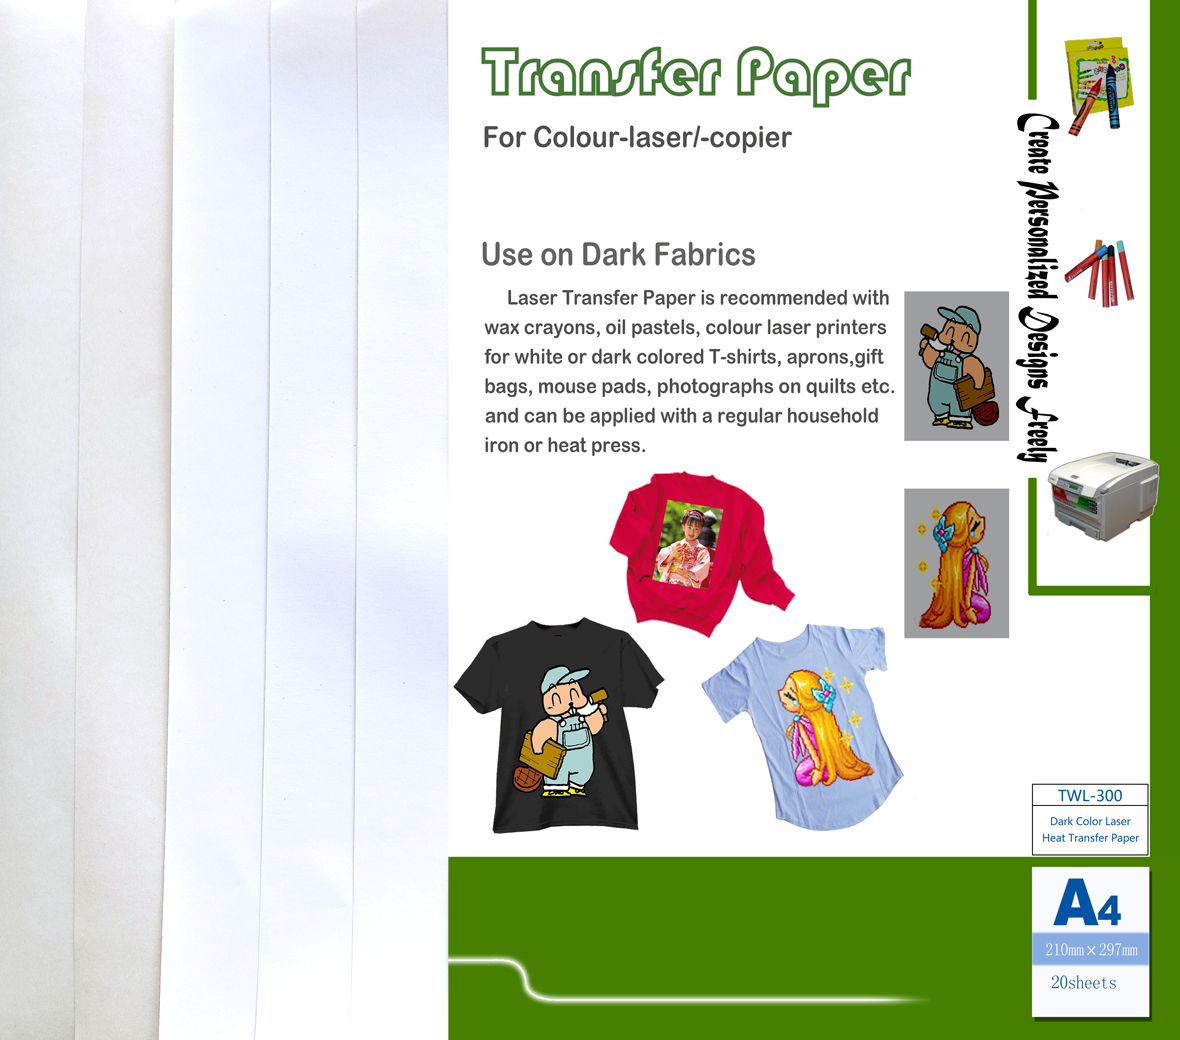 Dark Color Laser Transfer Paper Featured Image